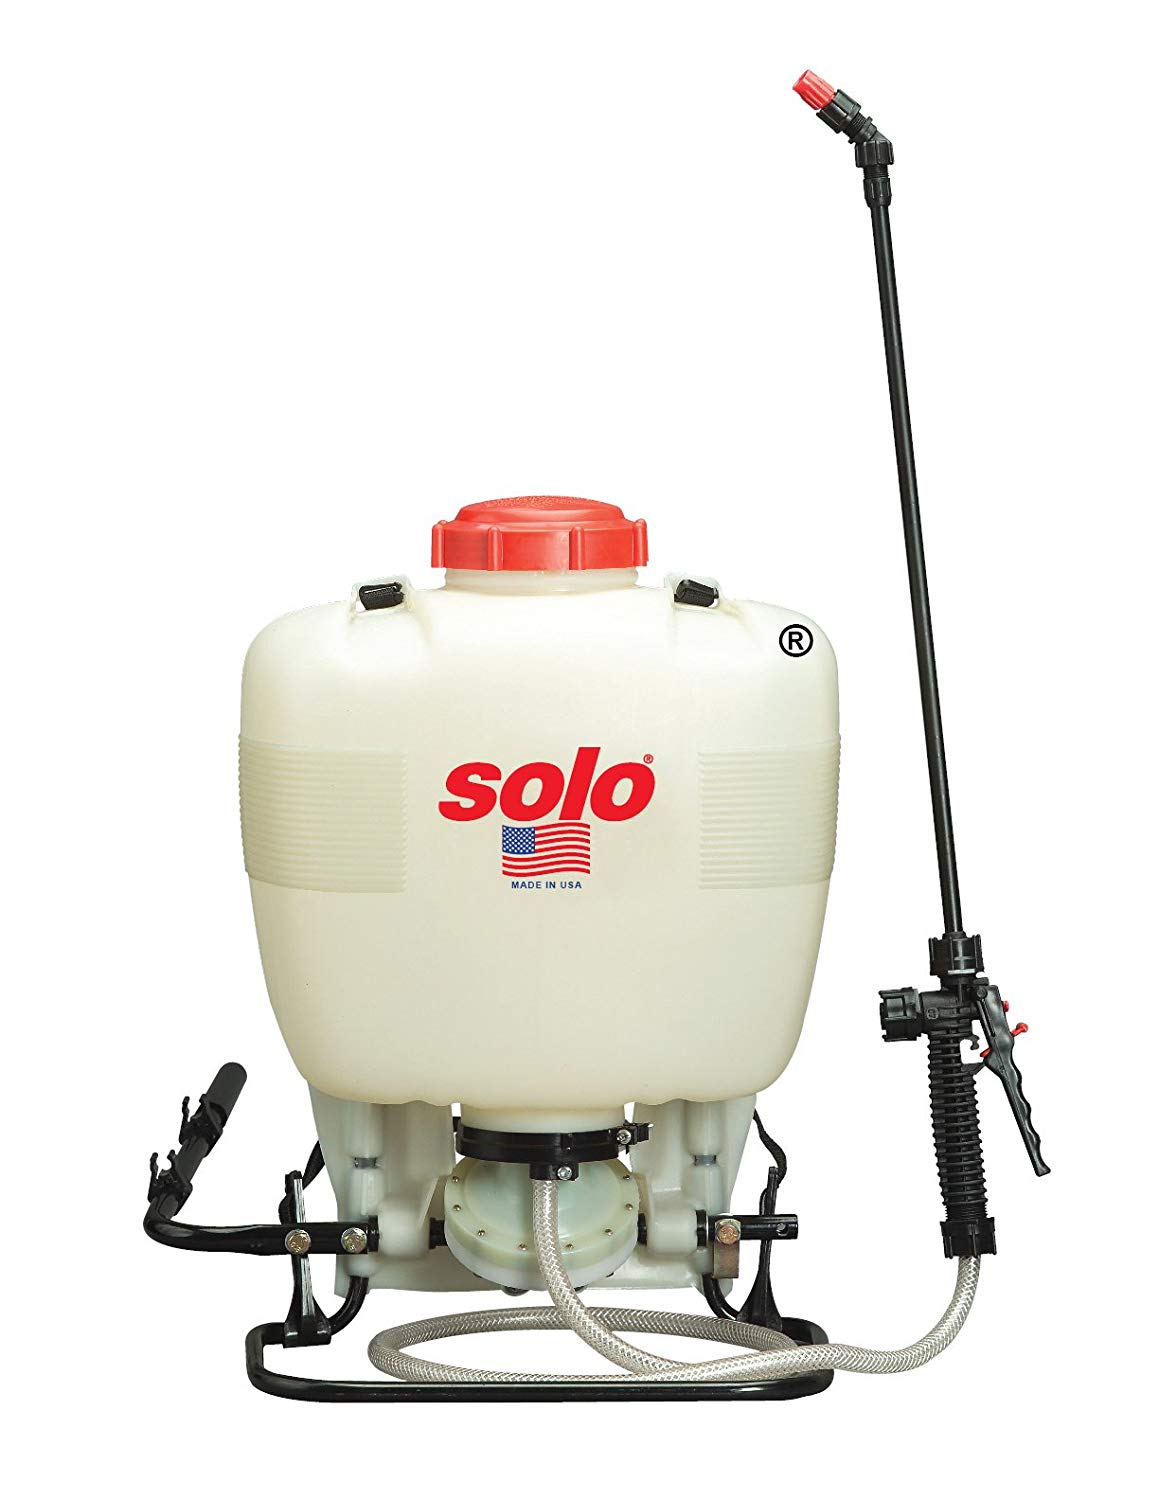  Solo Inc. 475-B Diaphragm Pump Backpack Sprayer